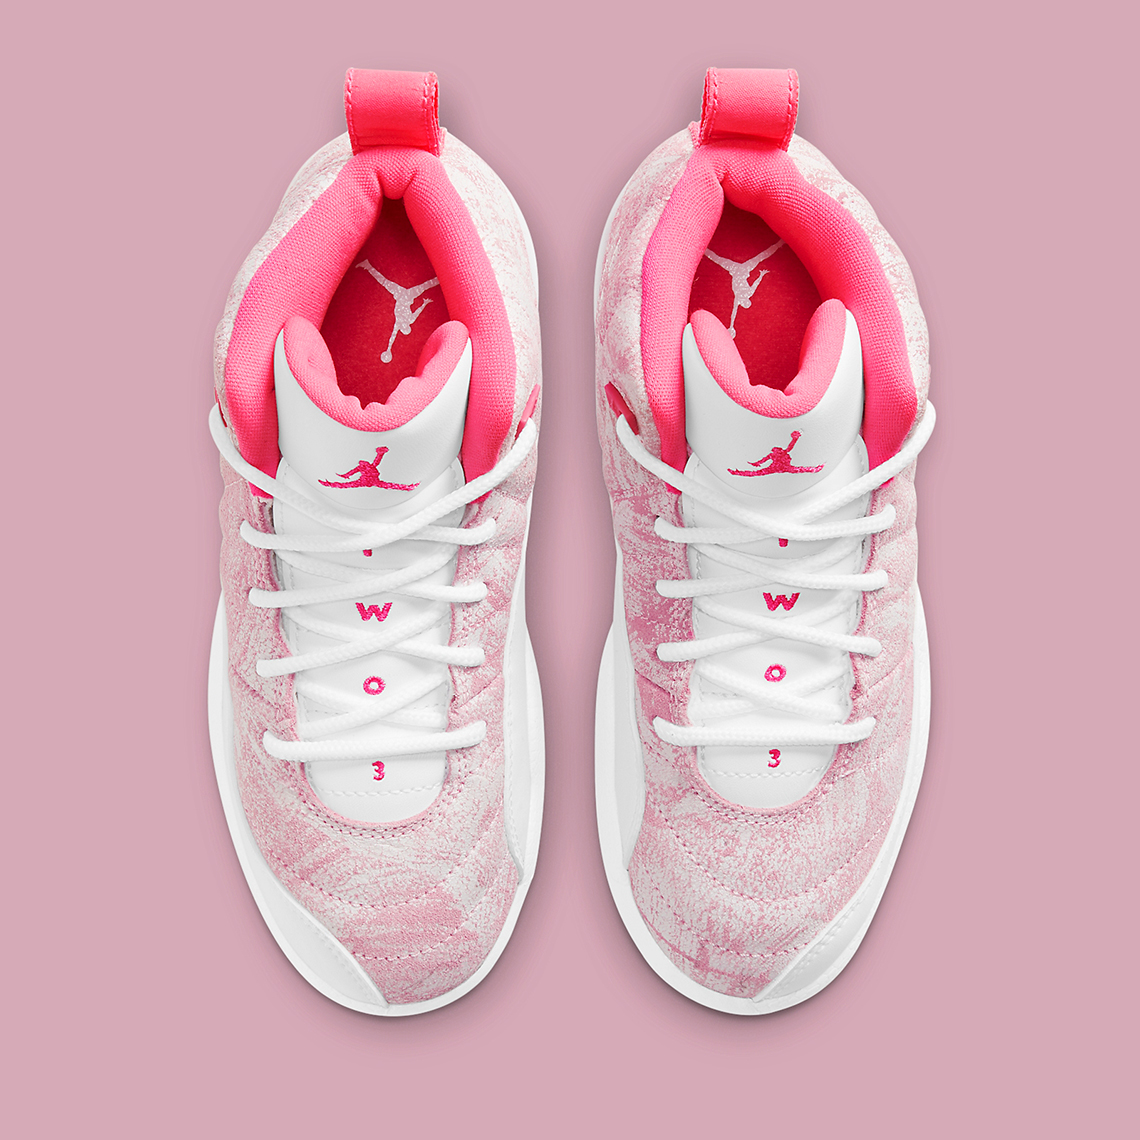 jordan 12s pink and white